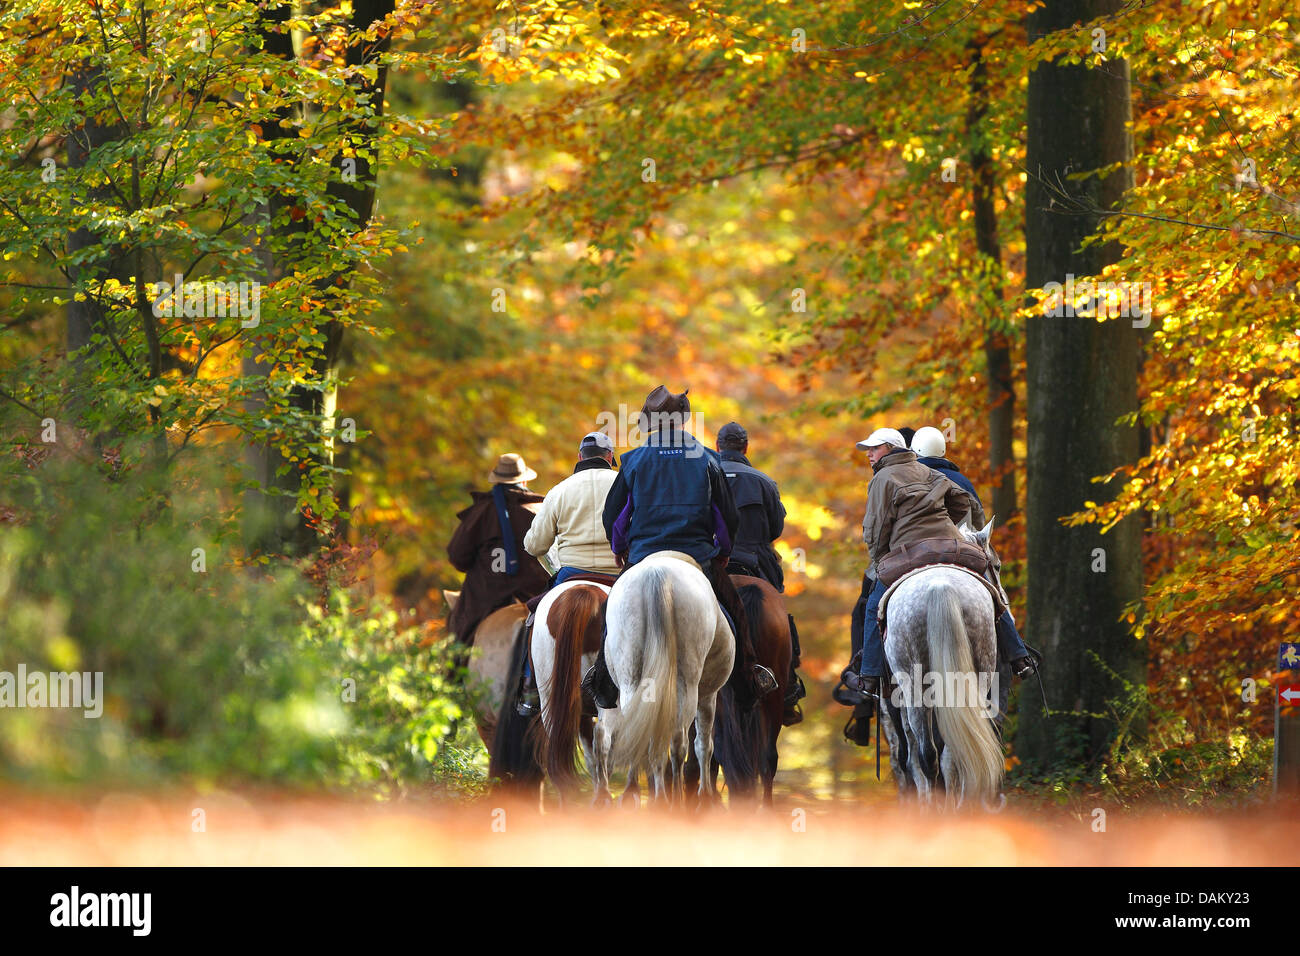 group on horseback riding through an autum forest, Belgium Stock Photo